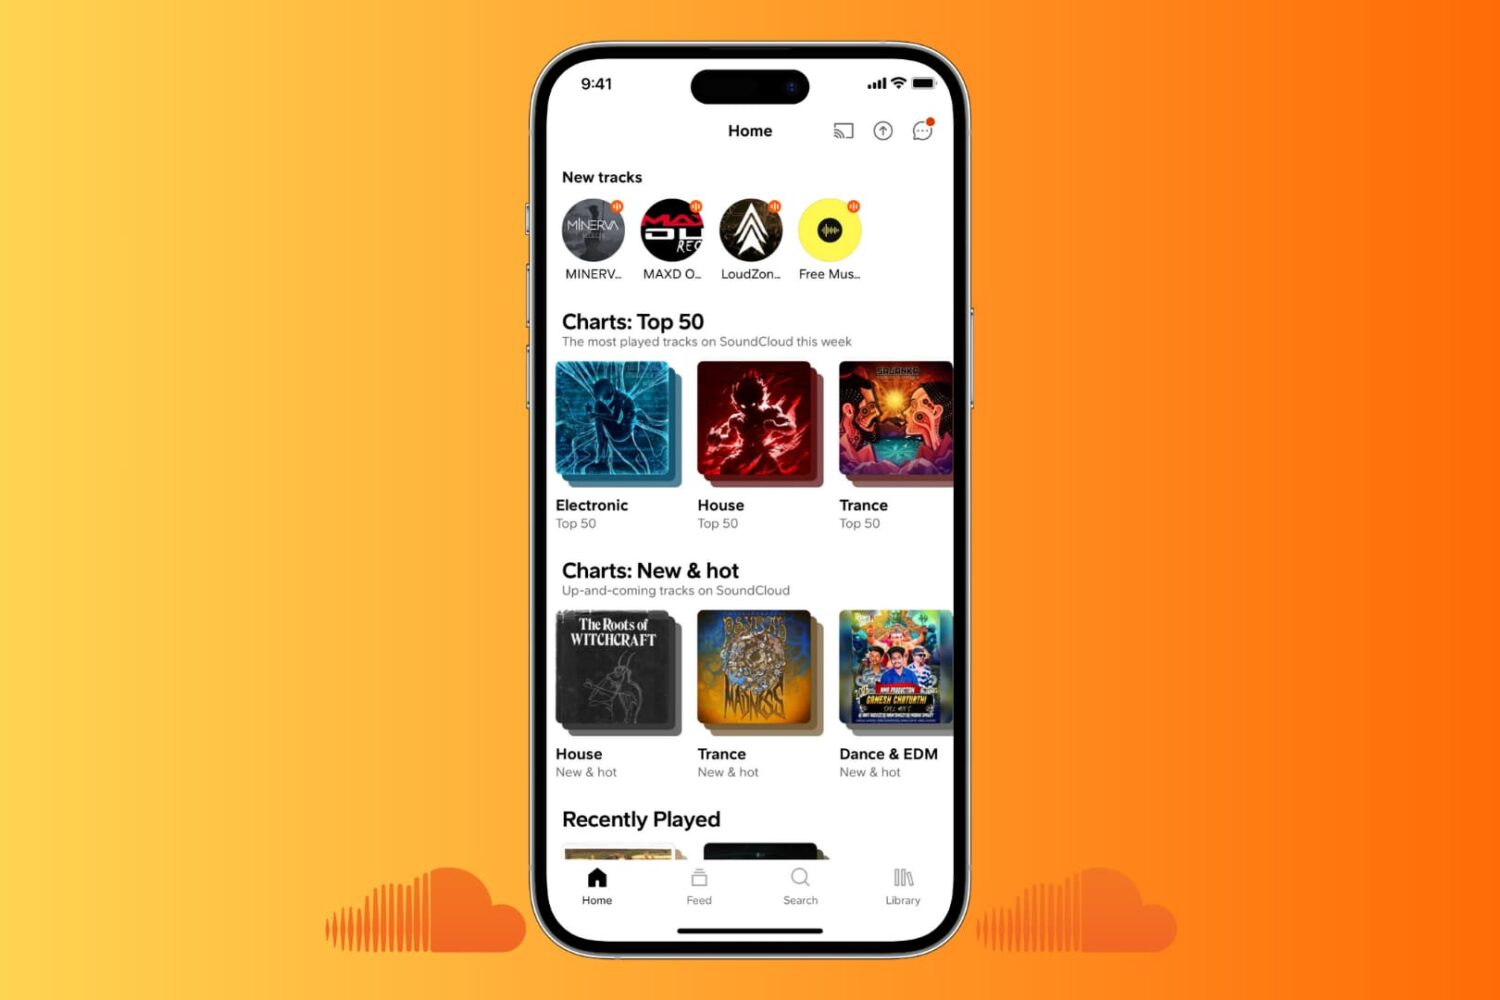 SoundCloud on iPhone